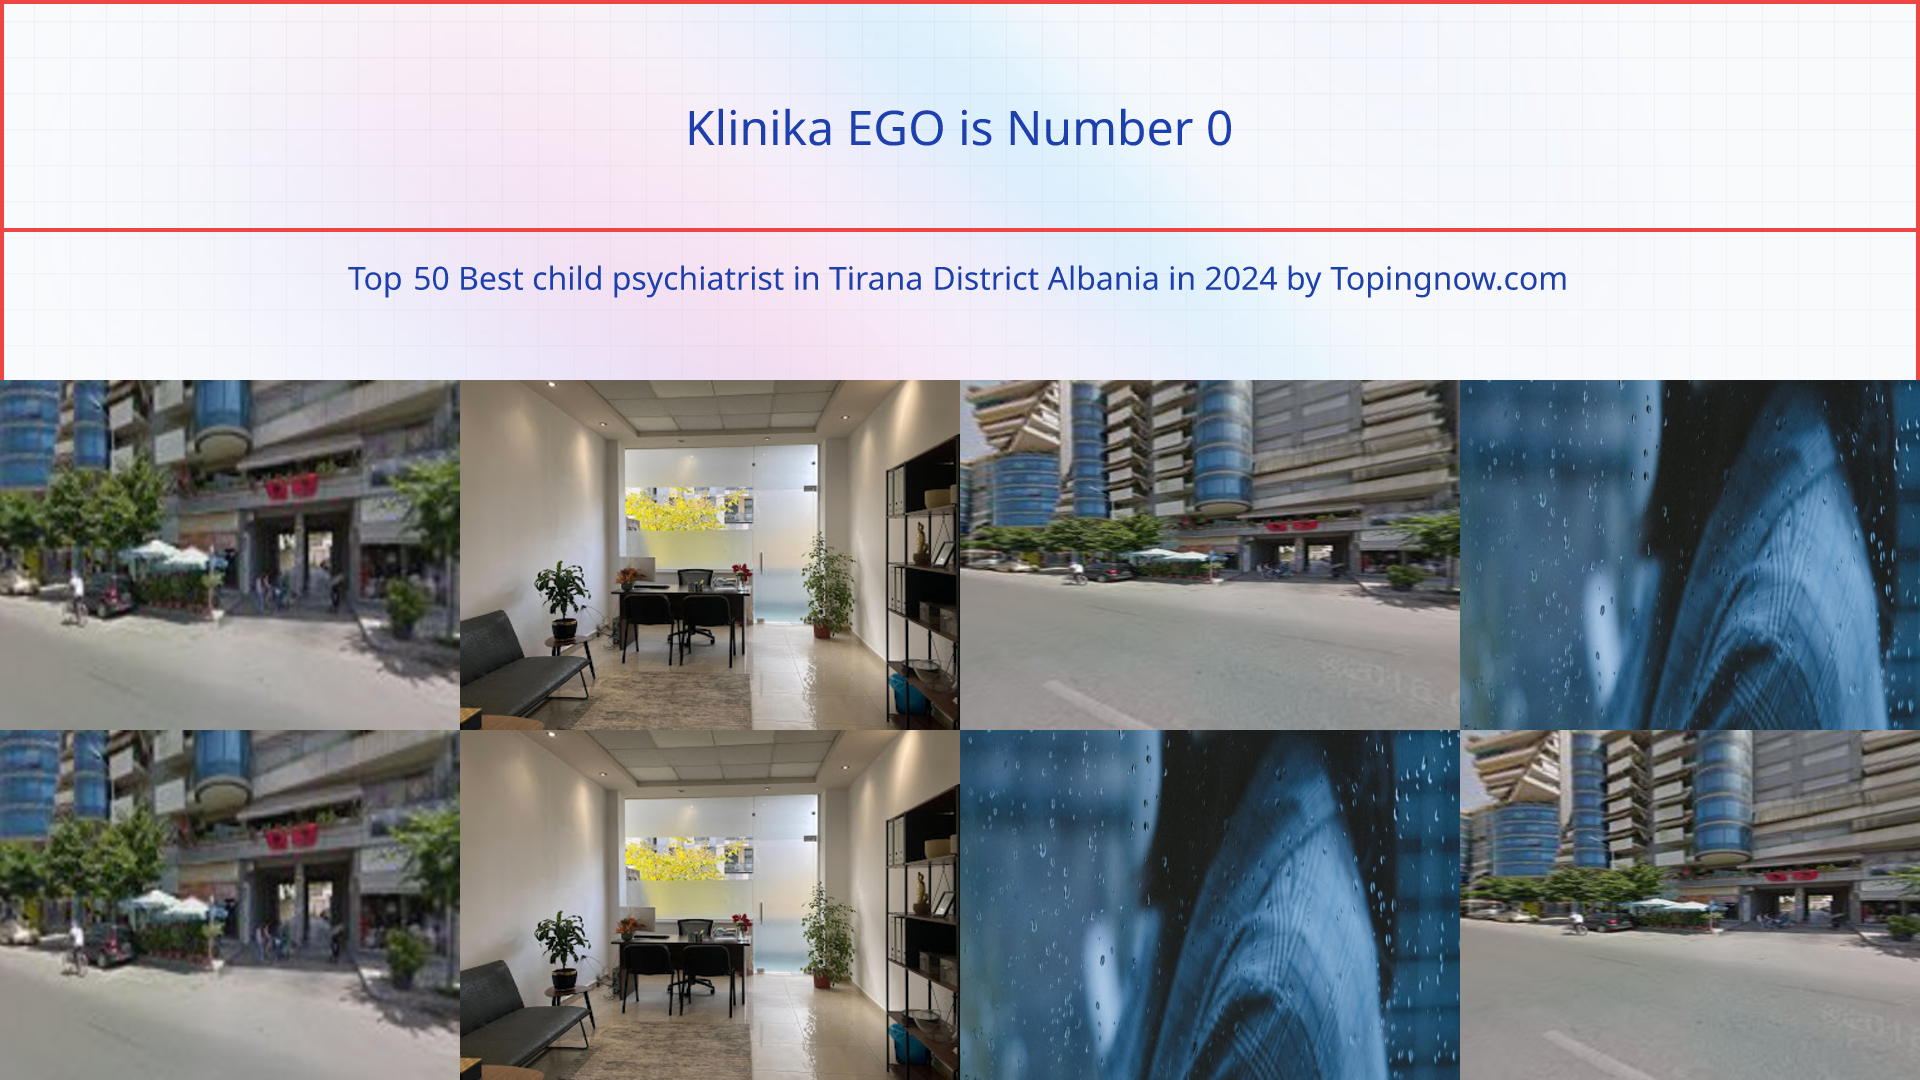 Klinika EGO: Top 50 Best child psychiatrist in Tirana District Albania in 2024